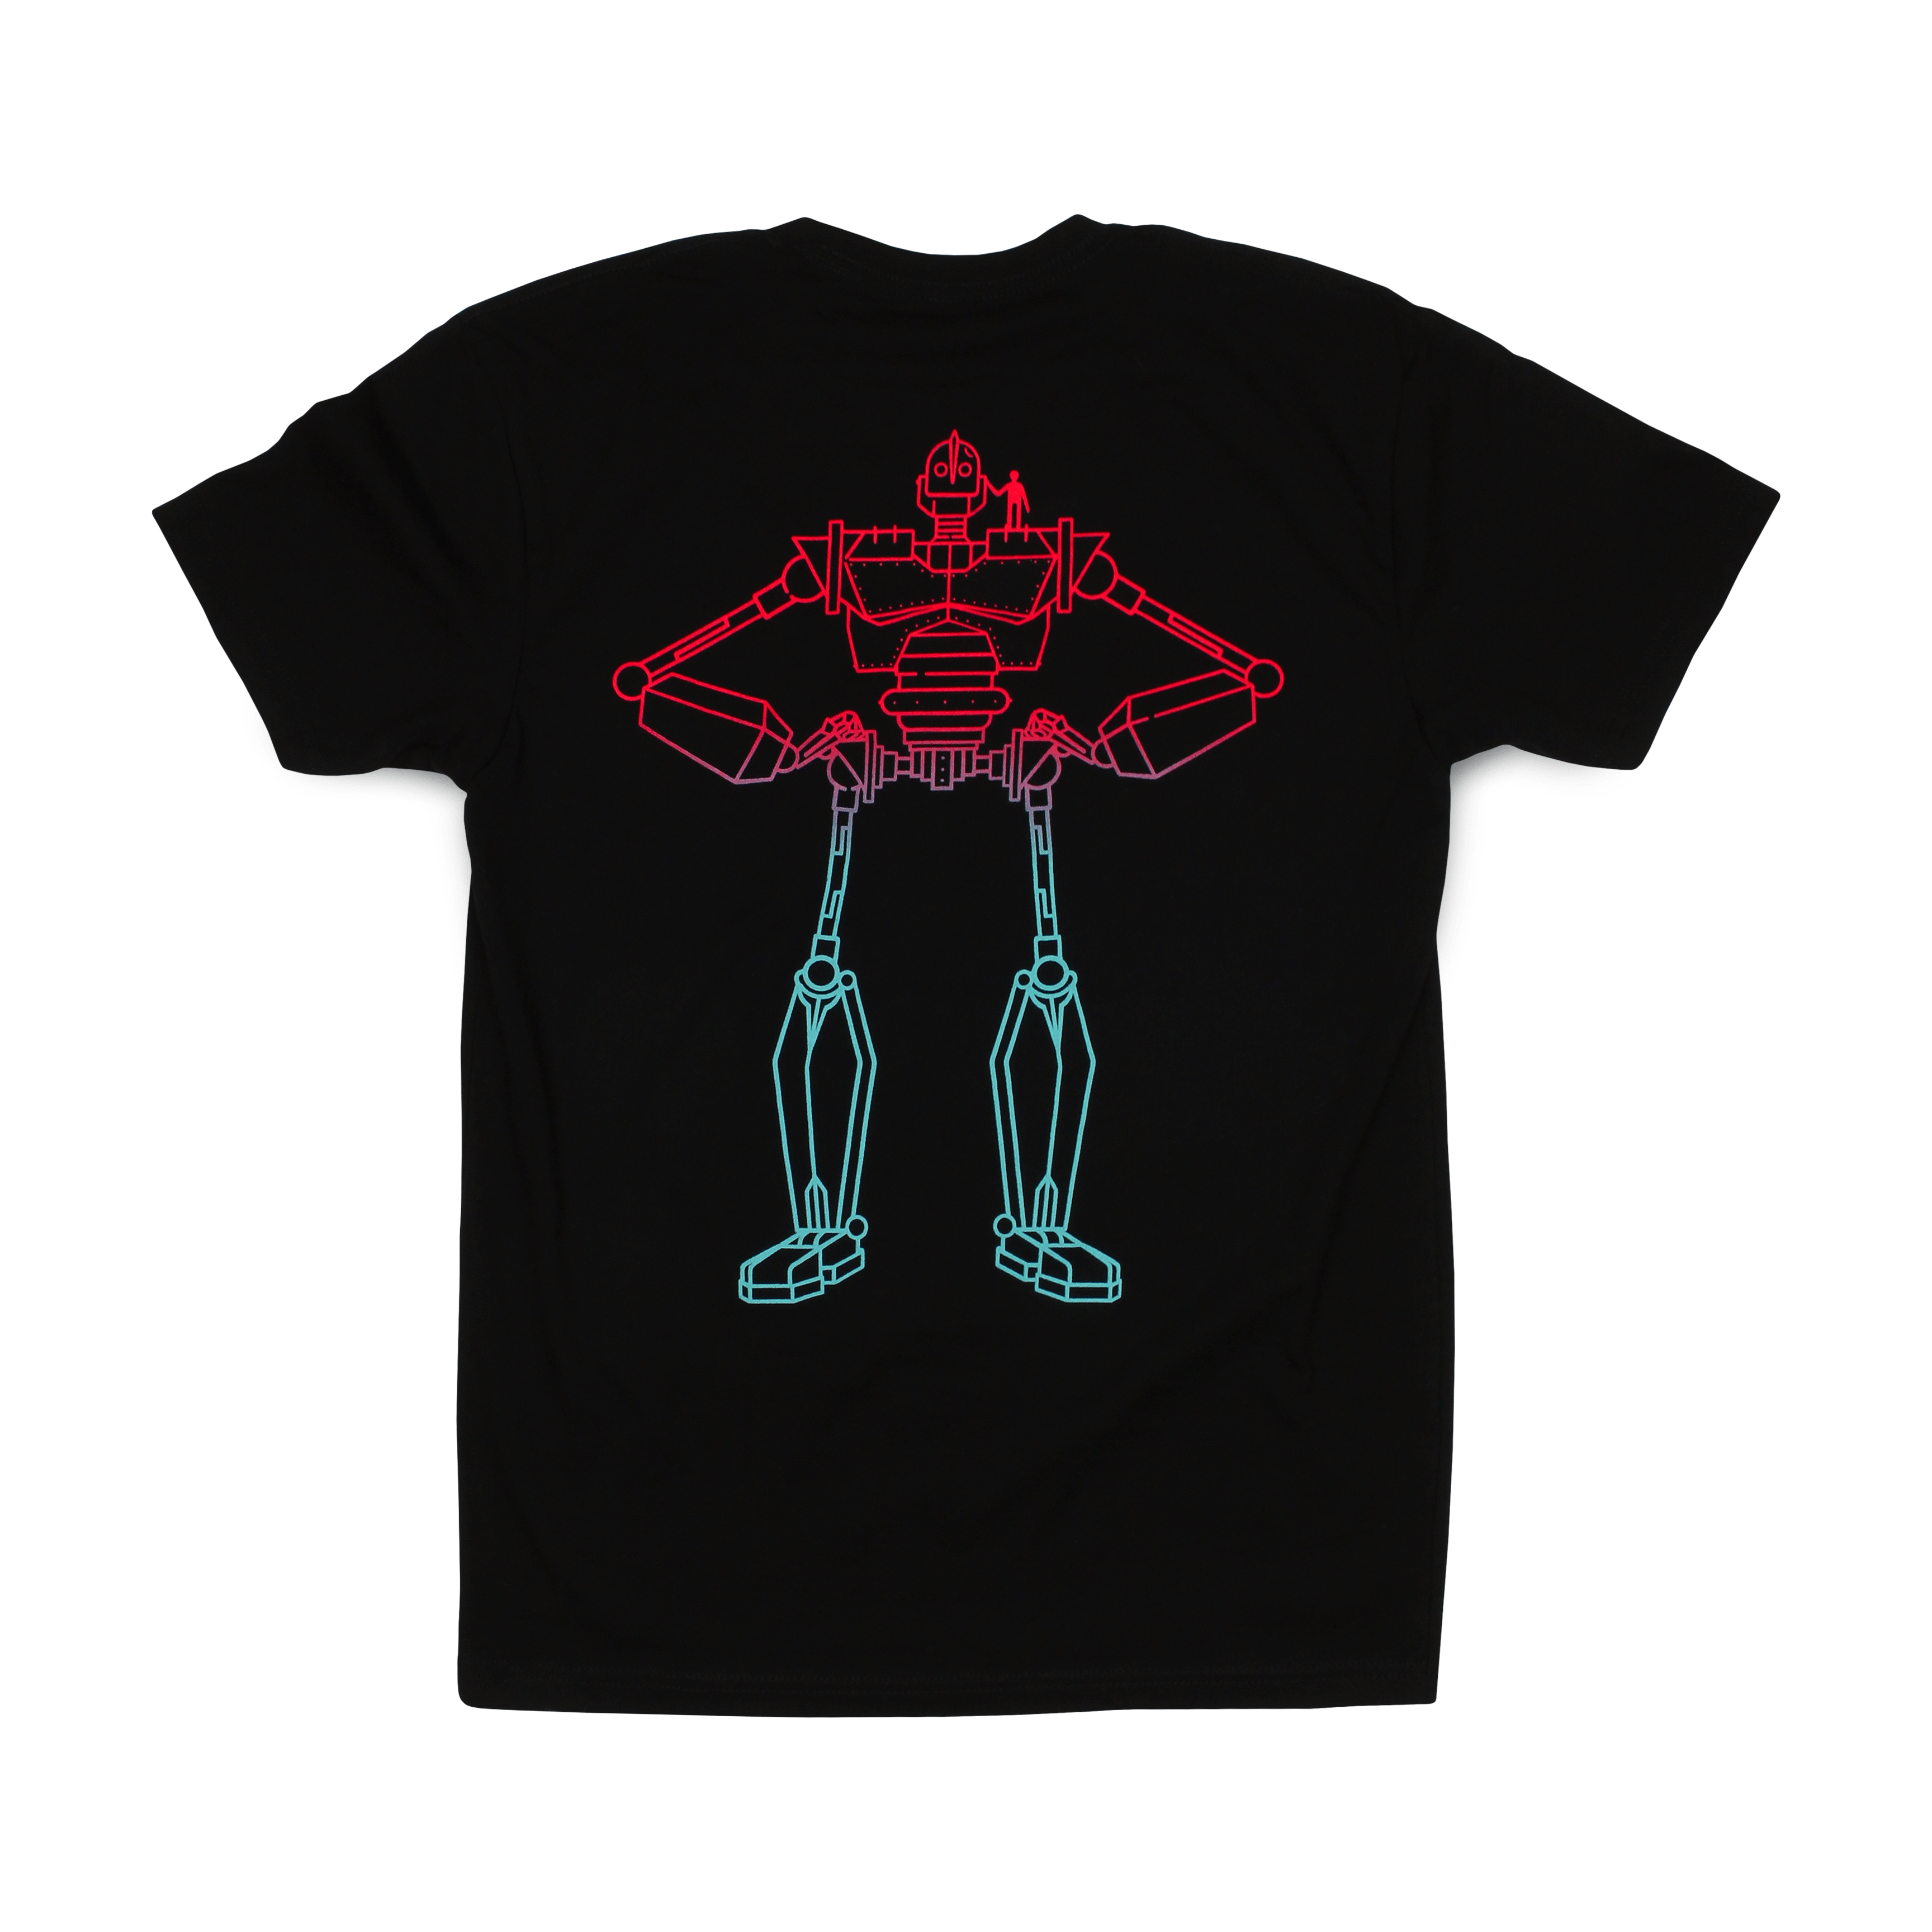 The Iron Giant T-Shirt